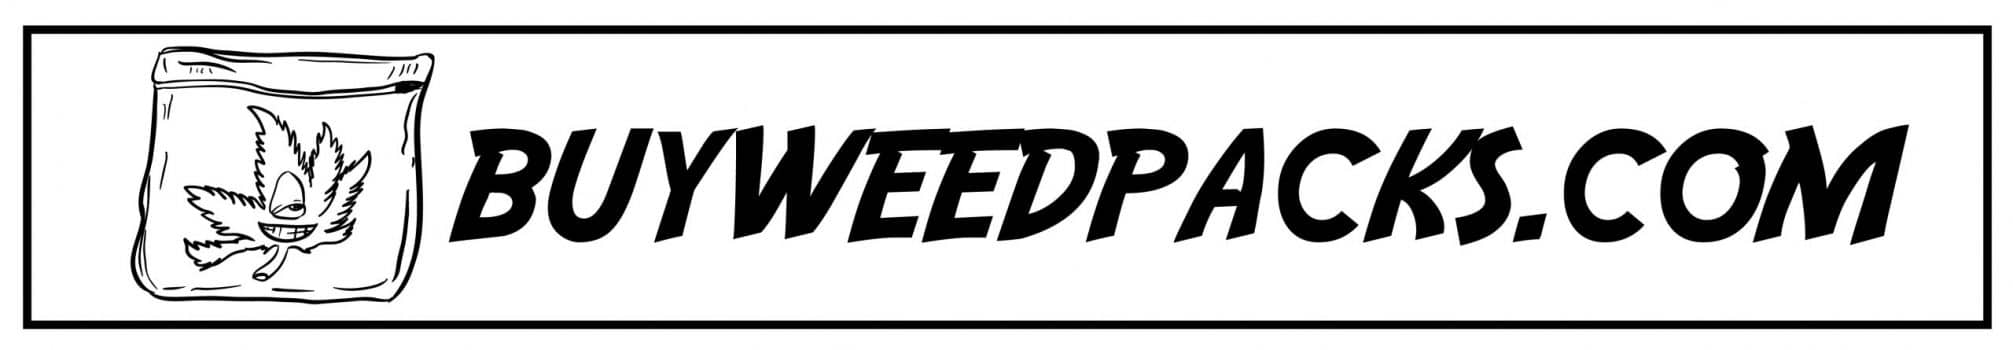 BuyWeedPacks Top Online Cannabis Dispensary Coupon Code